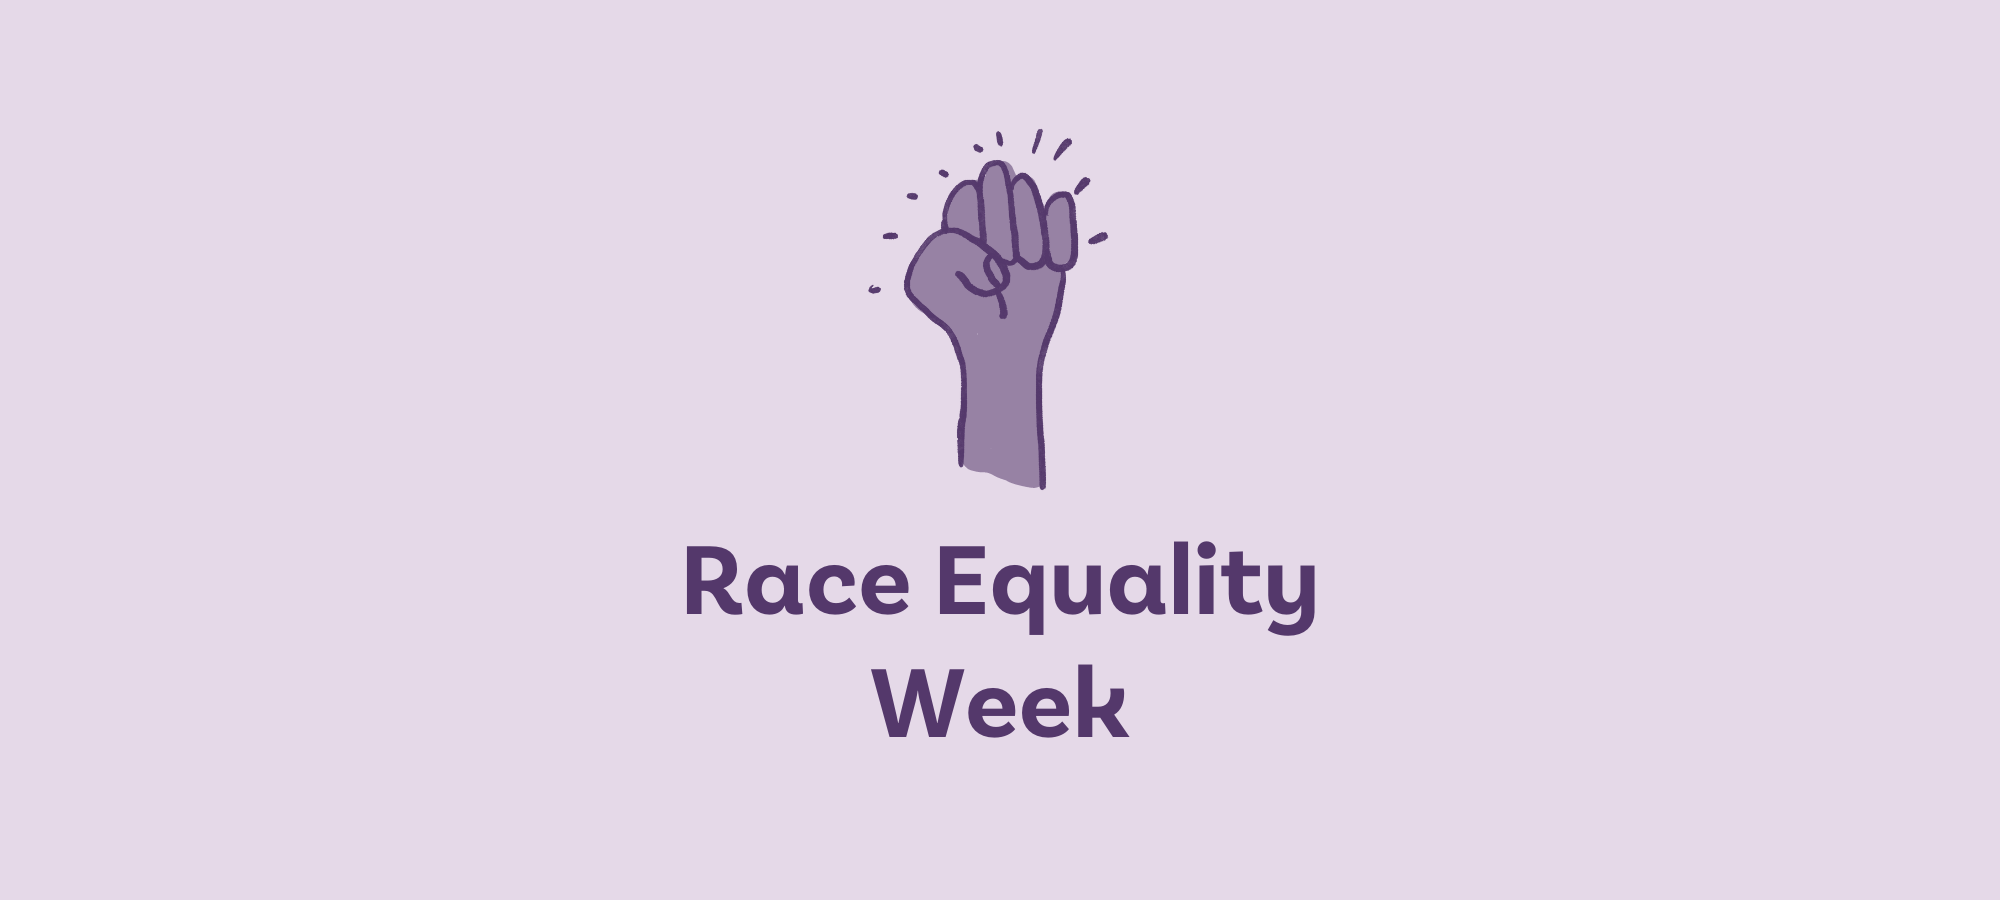 Race Equality Week Illustration